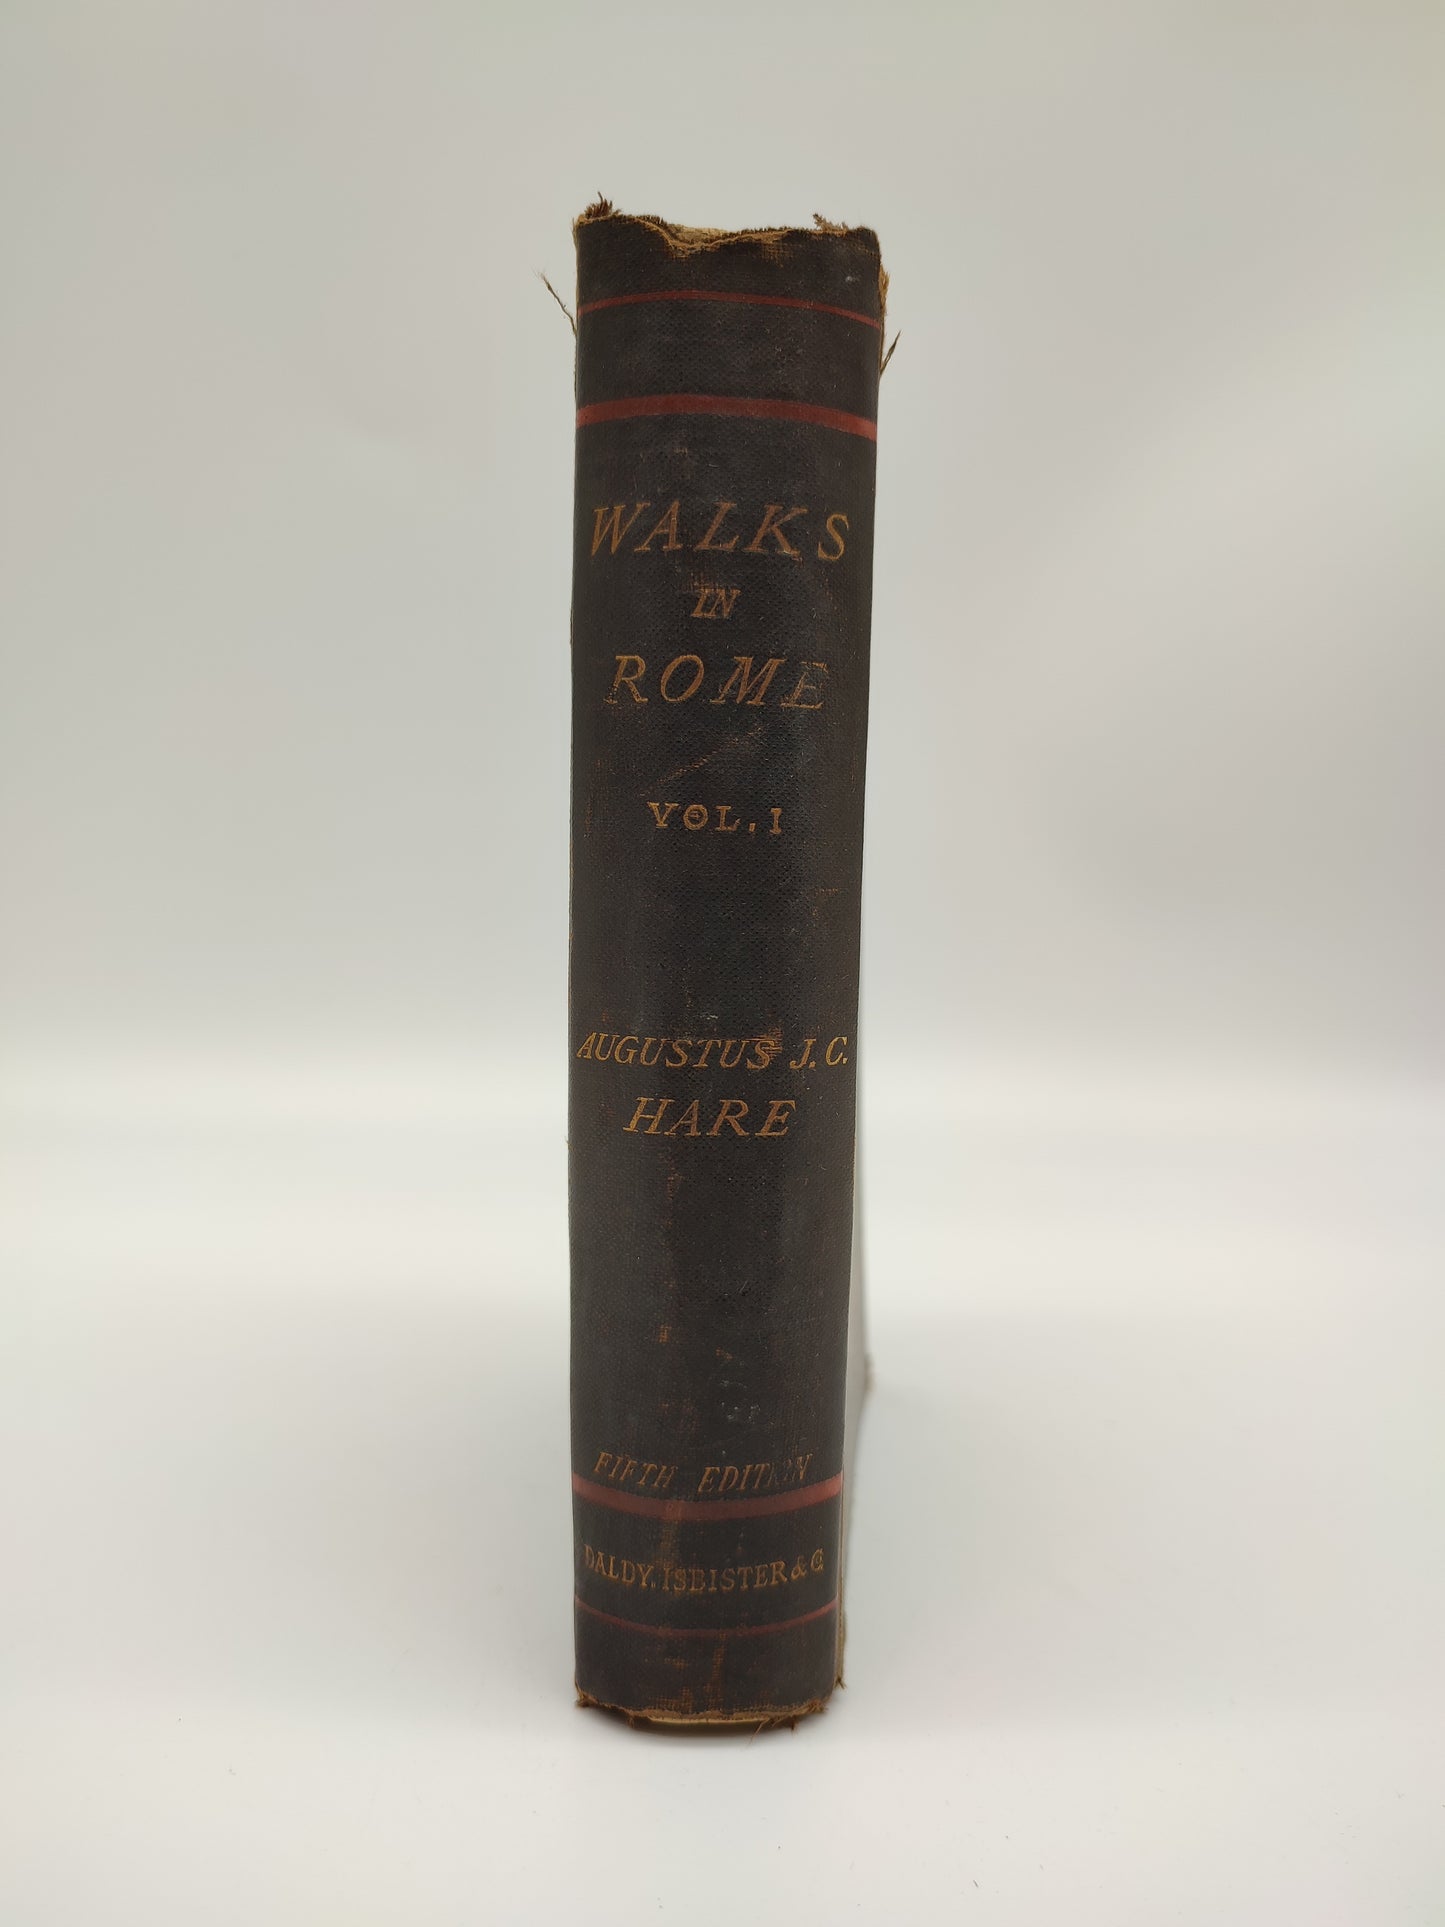 69797 Walks in Rome, Augustus J. C. Hare, London, 1875, II volumi